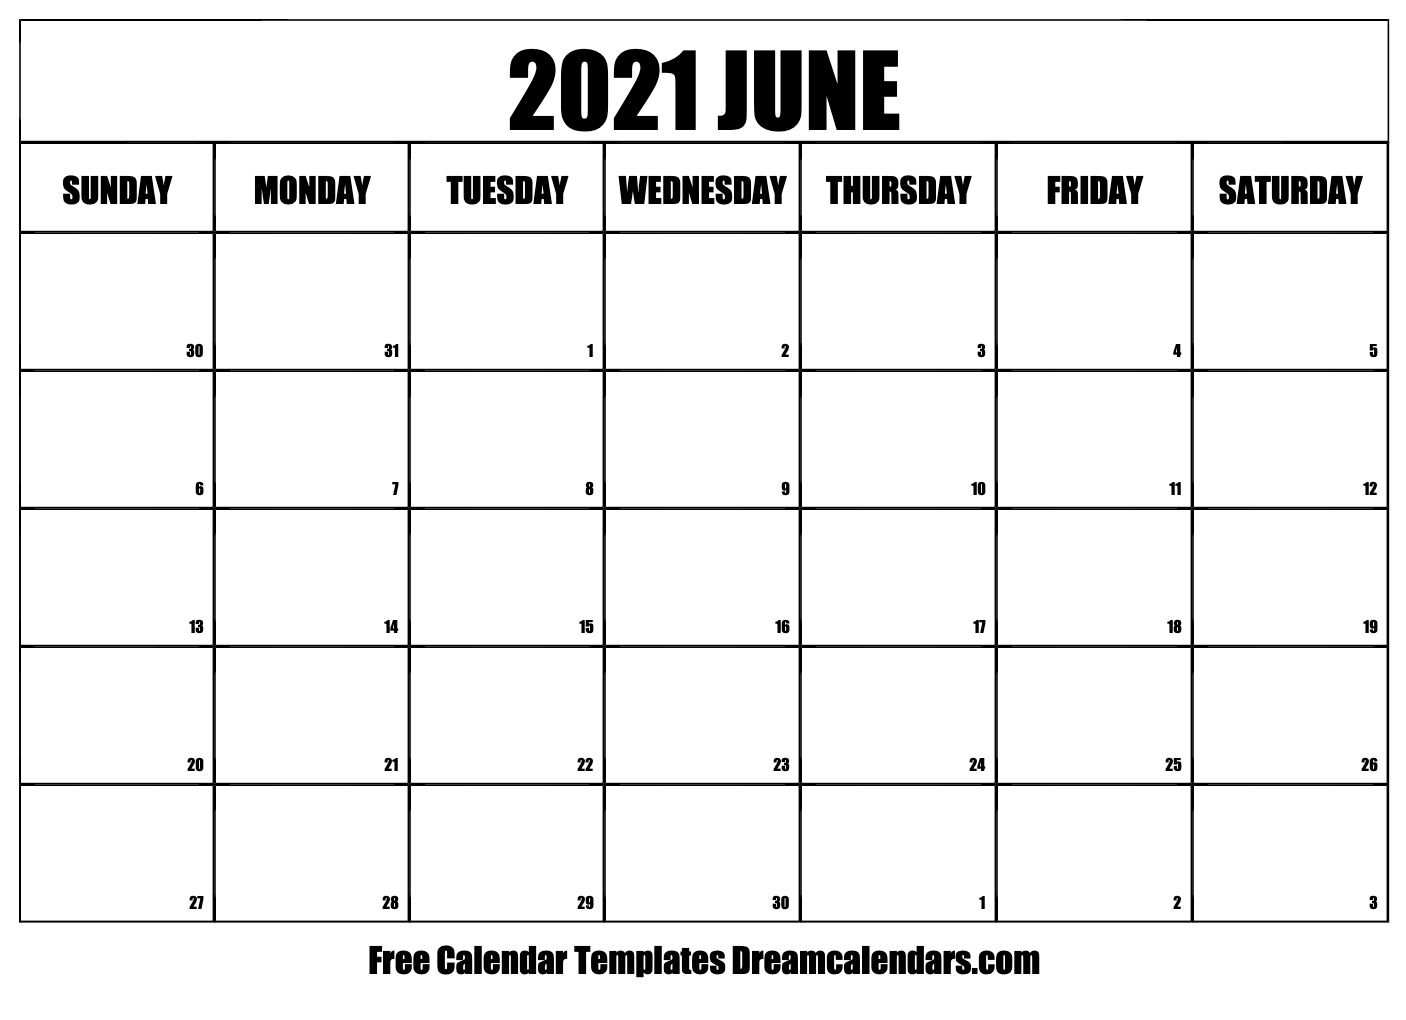 June 2021 calendar free blank printable templates